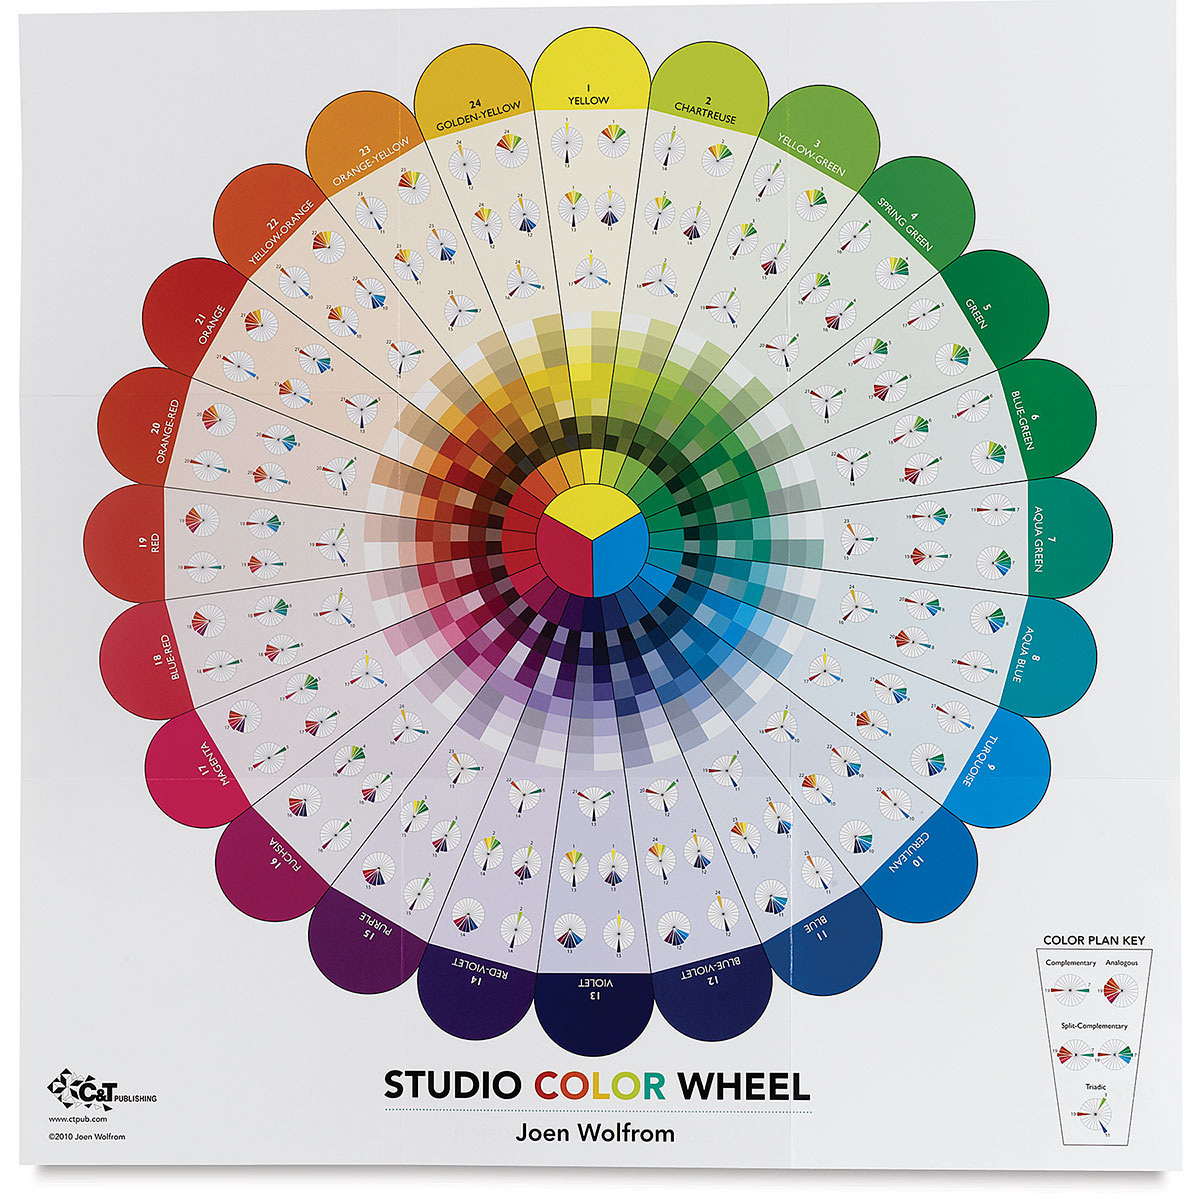 B2C Color Wheel & Elements of Art Posters - Each